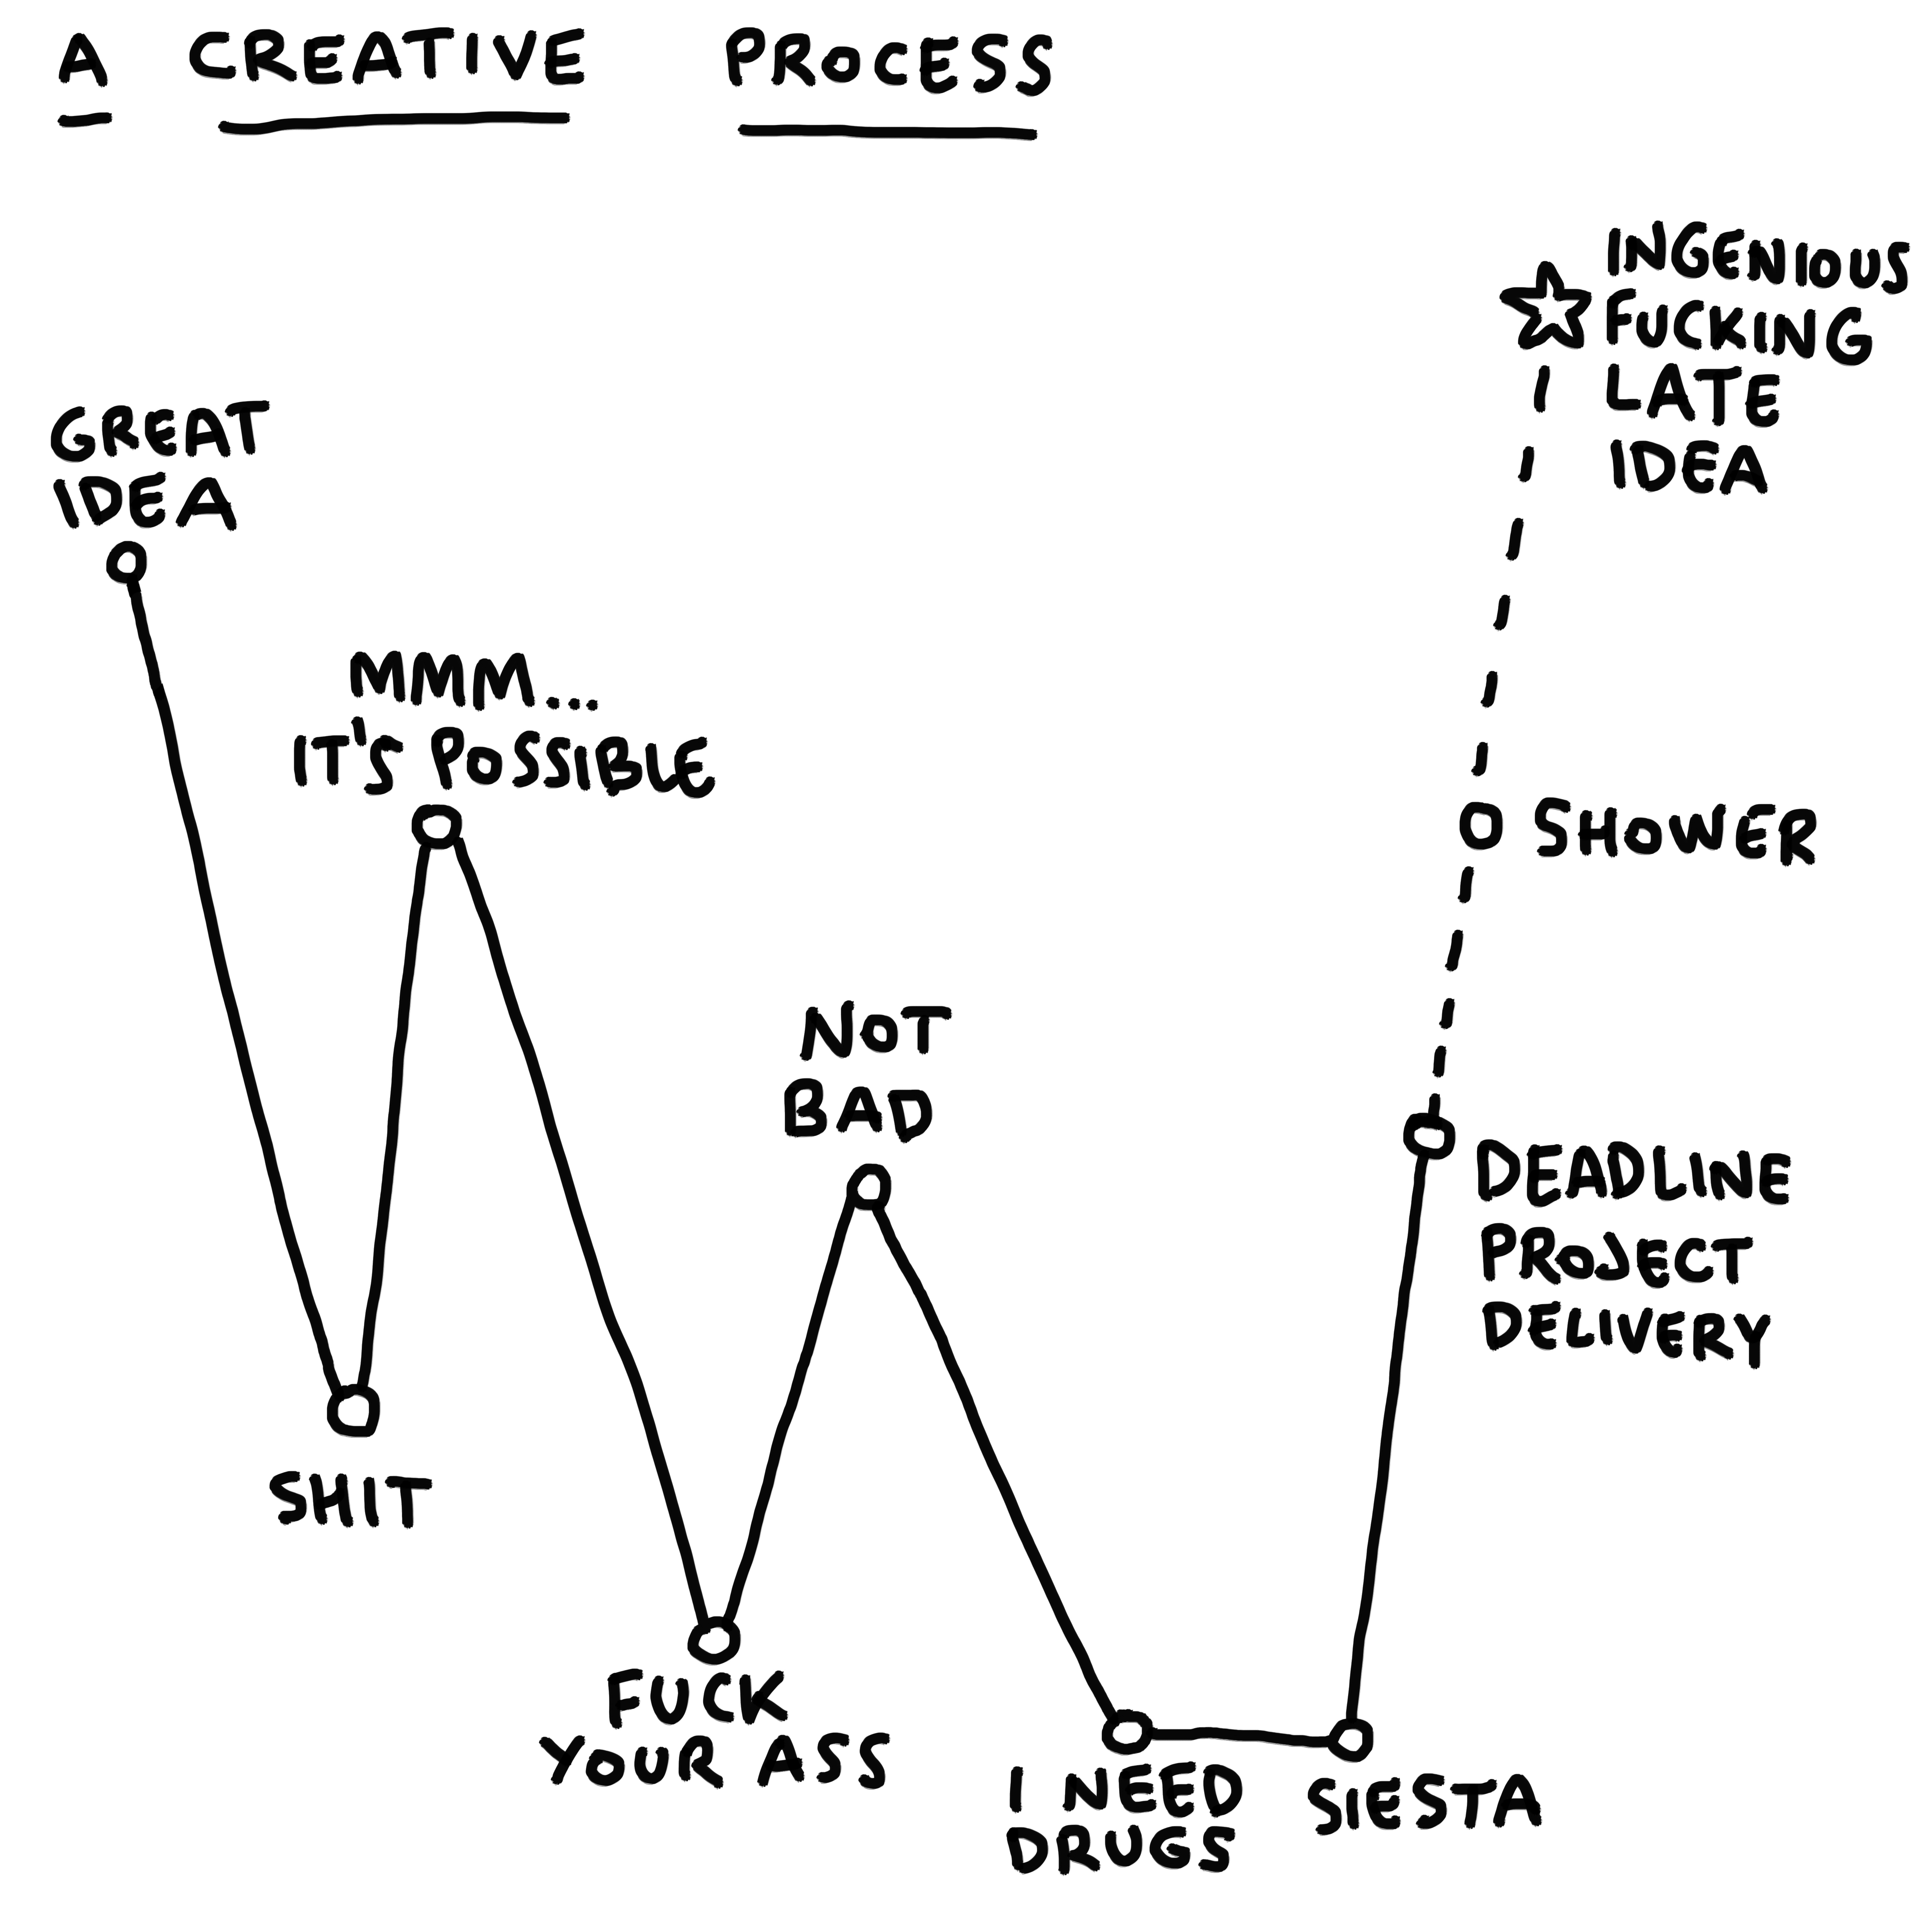 A Creative Process